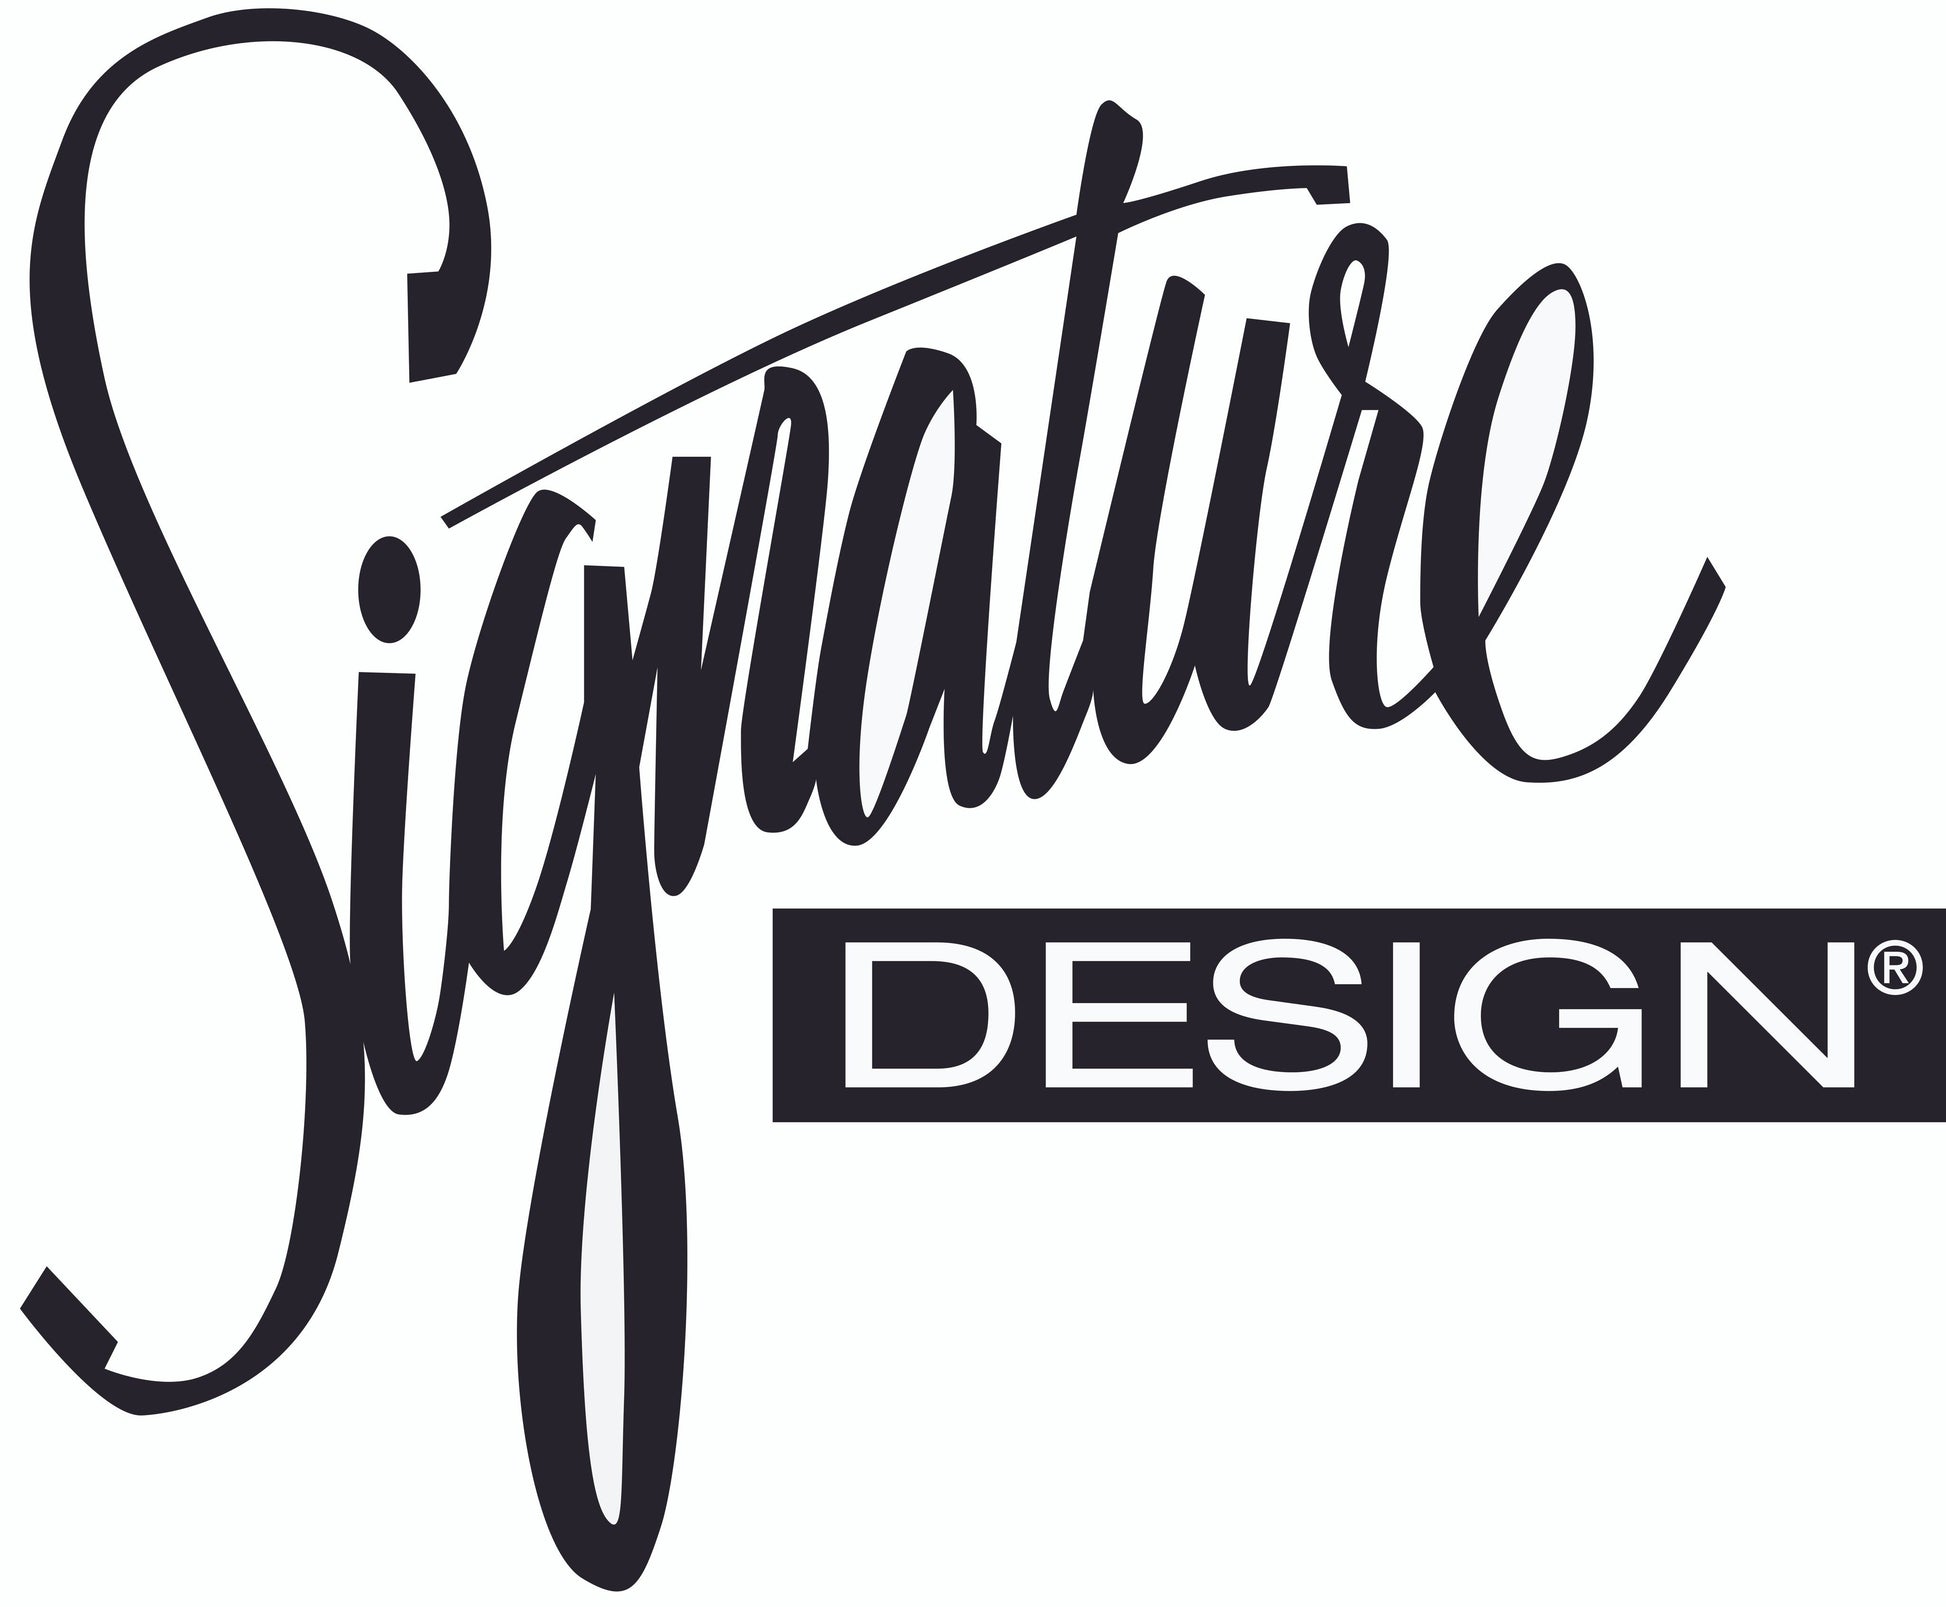 Chazney Rectangular End Table Signature Design by Ashley®